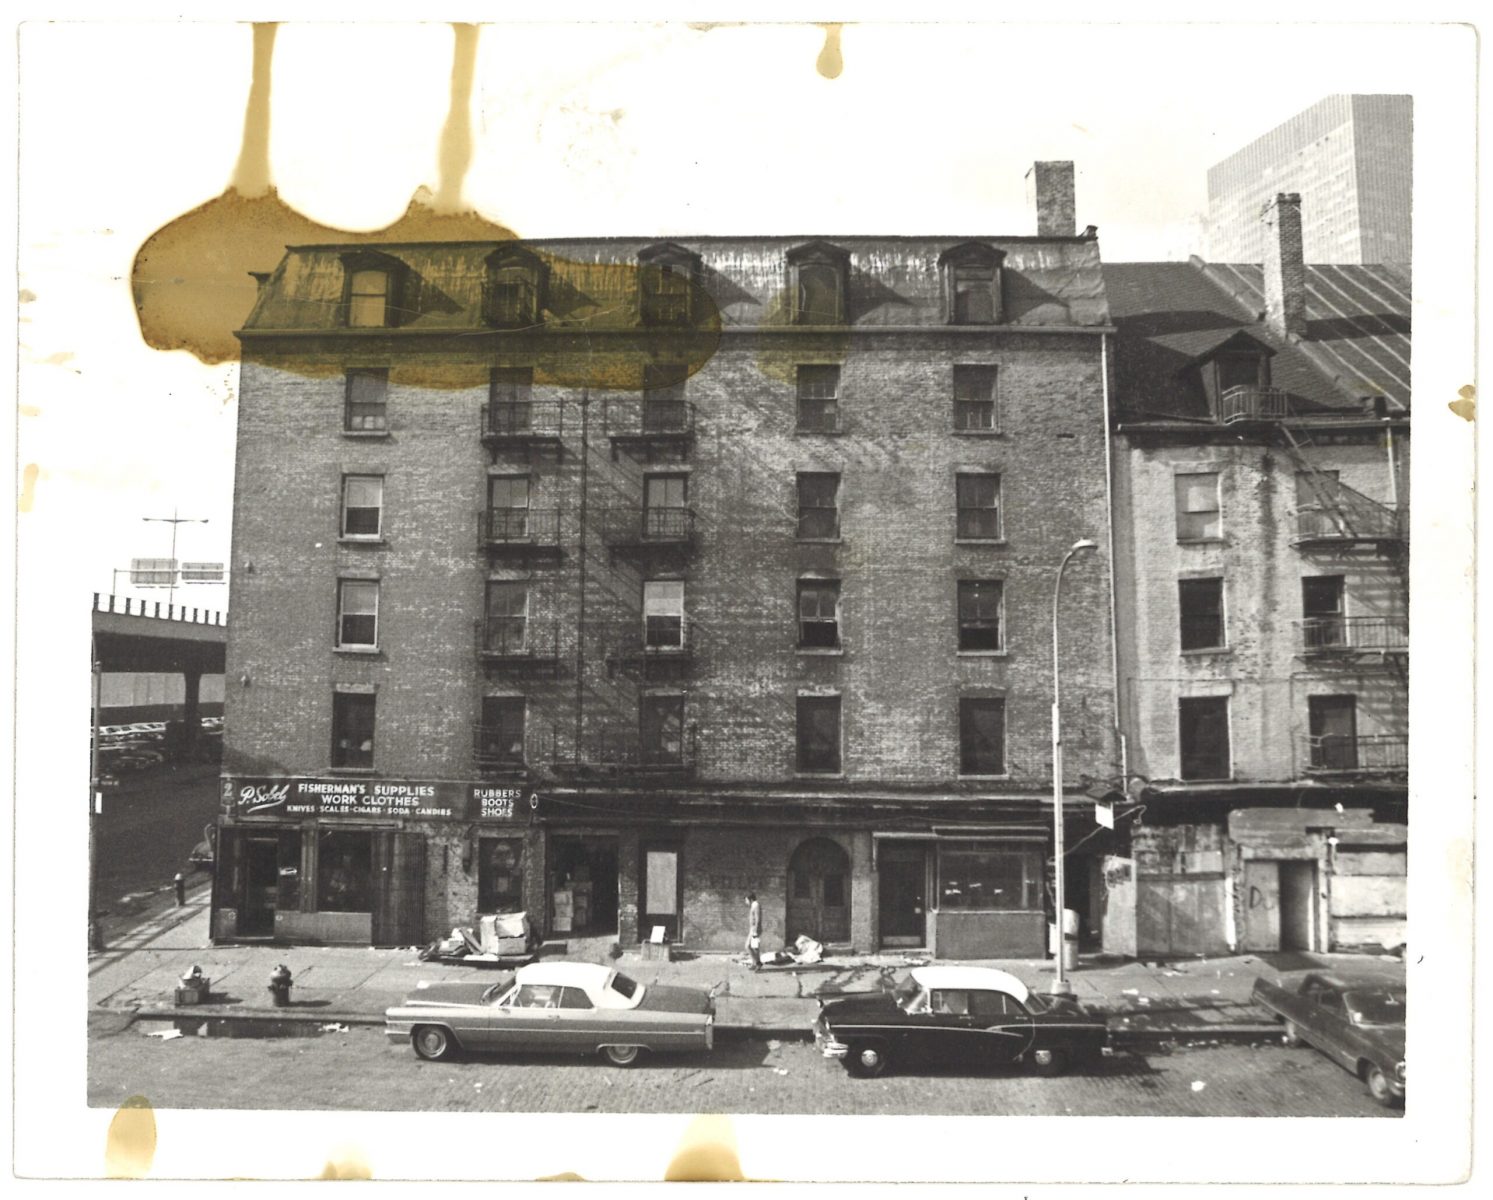 View of Schermerhorn Row pre-restoration, from the Market Building, ca. 1971